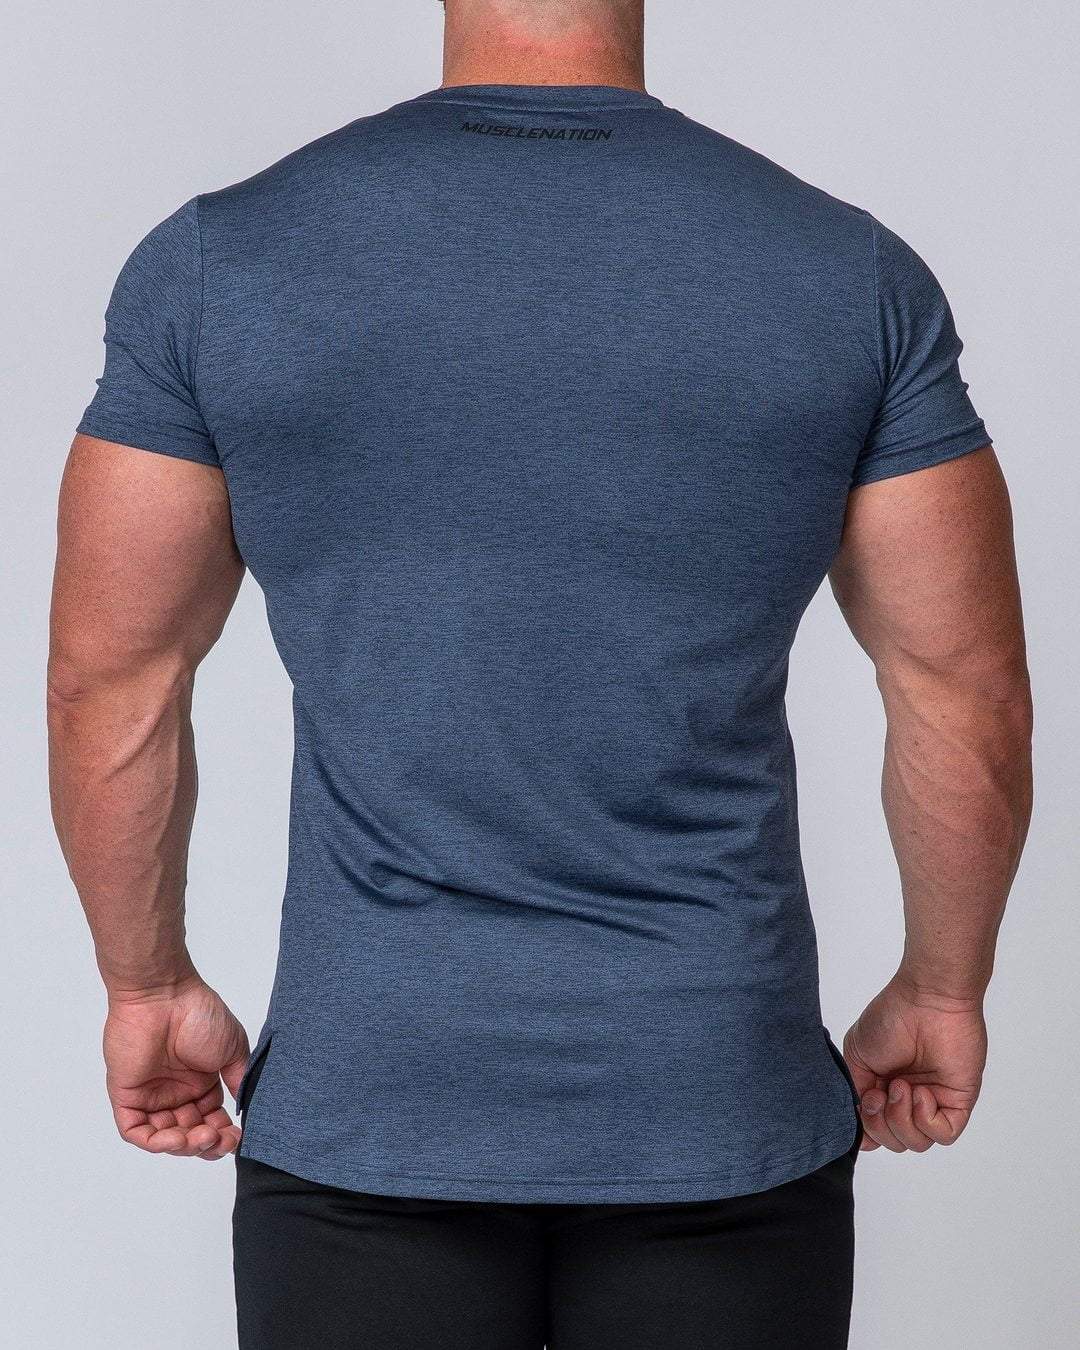 musclenation ClimaFlex Tshirt - Navy Marl